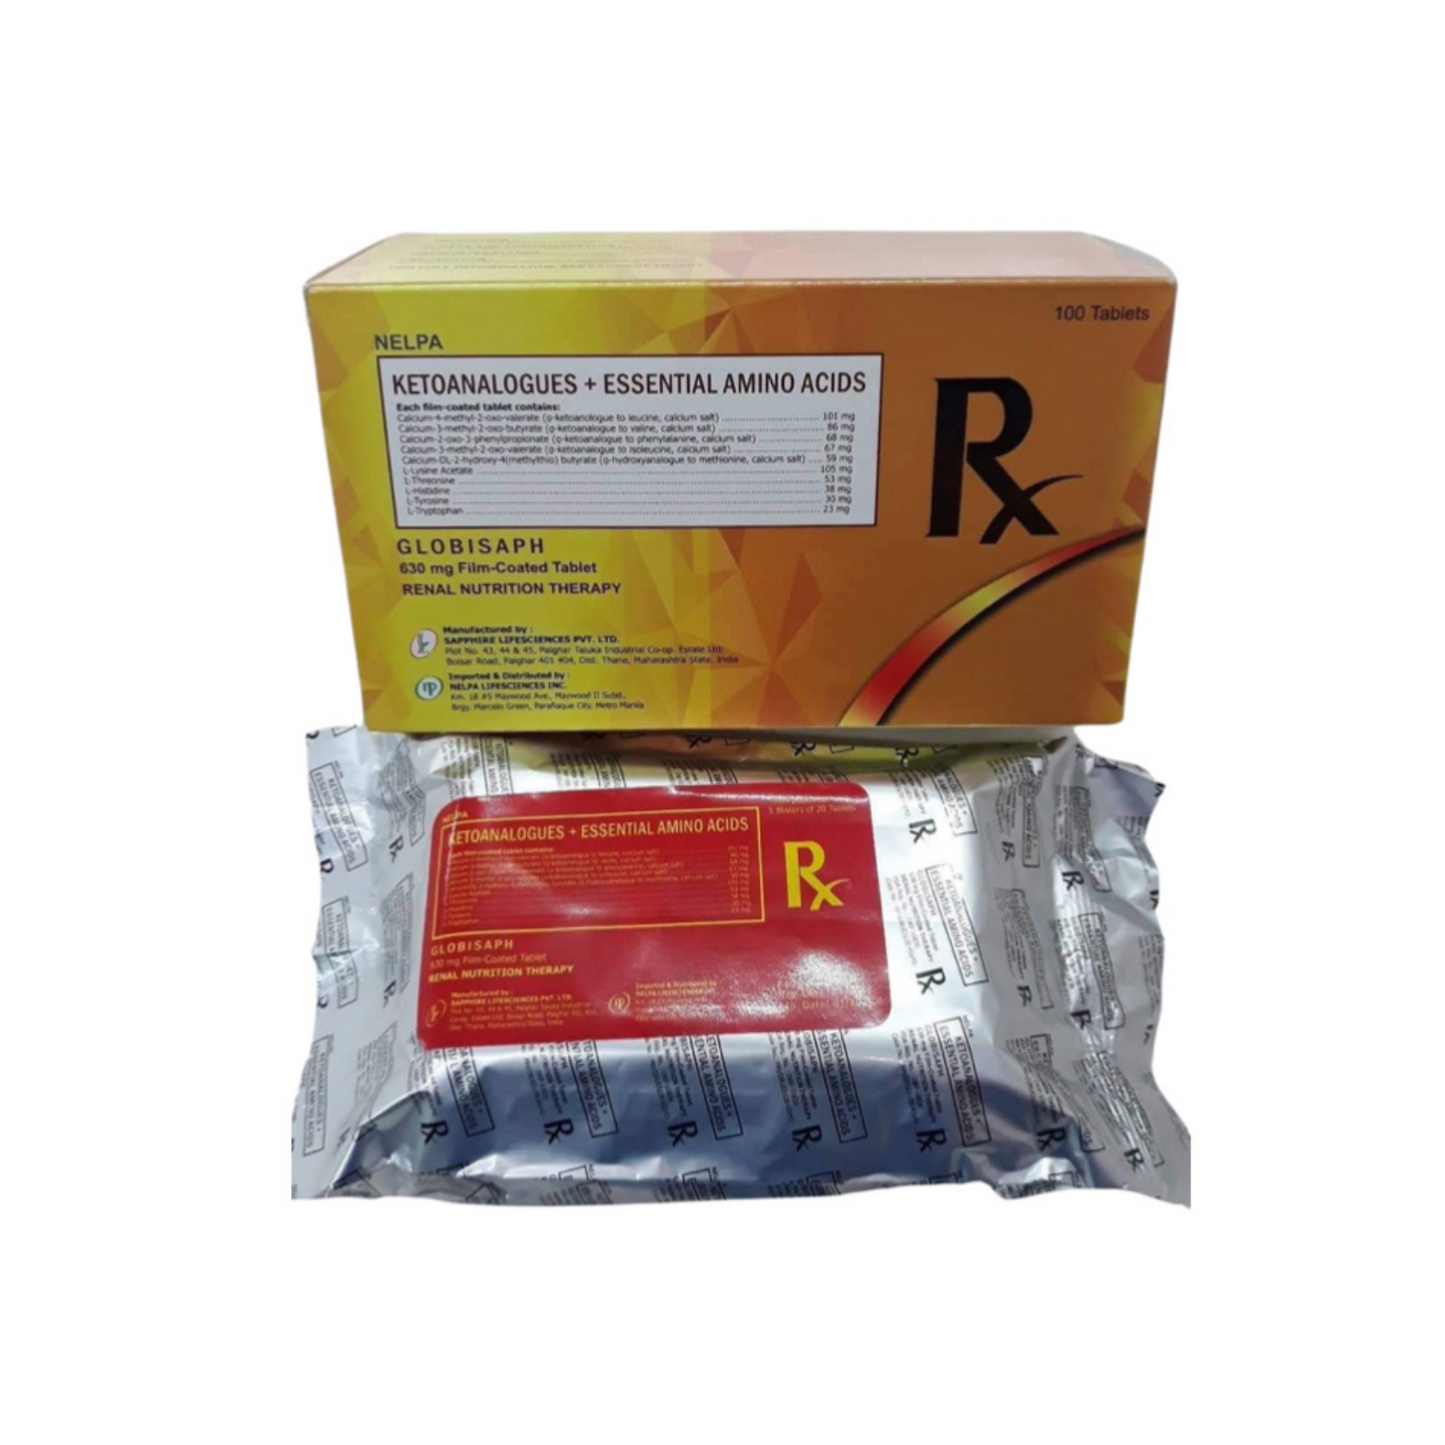 RENALOG Ketoanalogues + Essential Amino Acids Tablet x 1